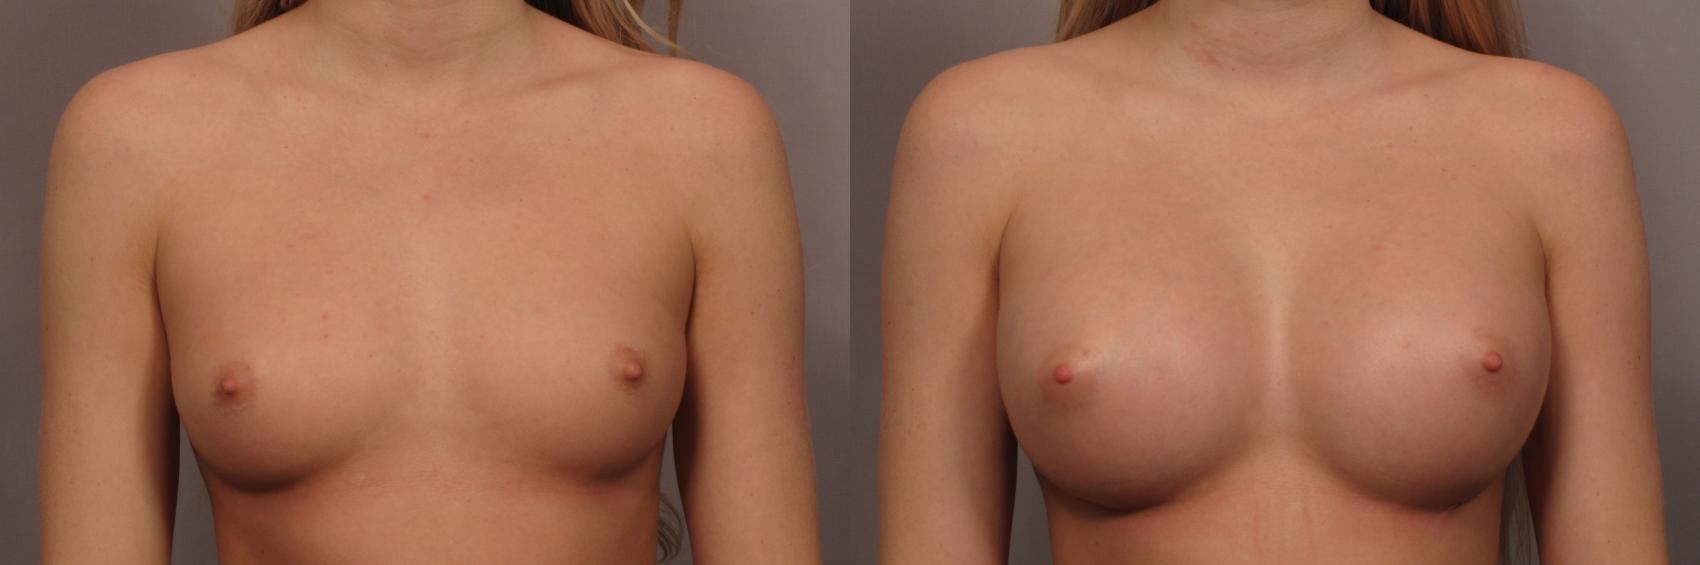 Kent Hasen医生用375毫升硅胶植入物隆胸的前视图